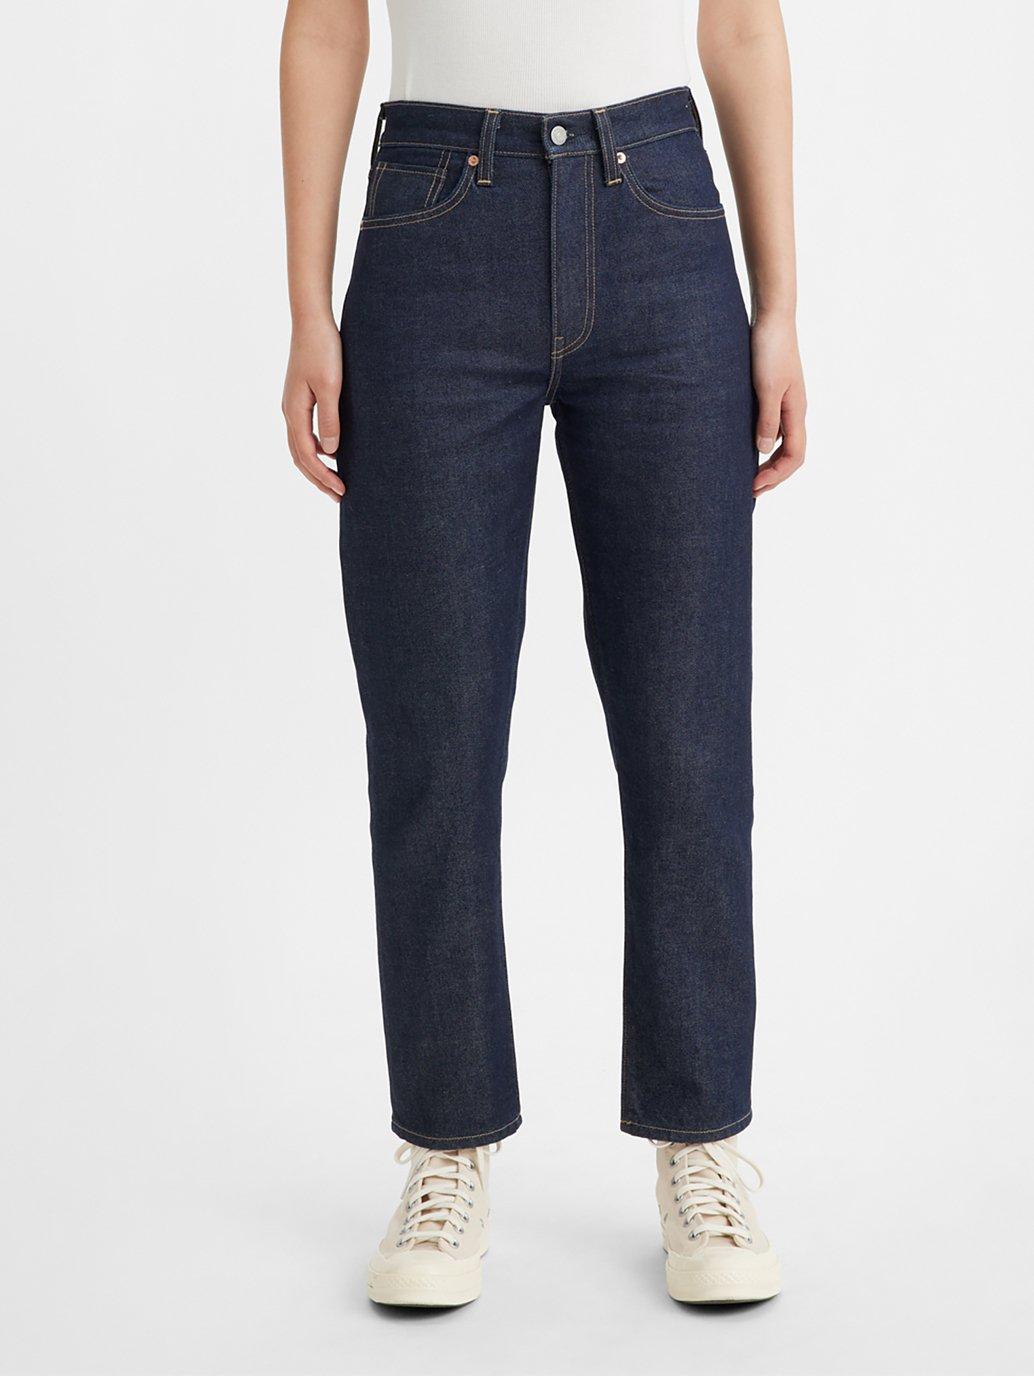 Buy Levi's® Women's Made in Japan High-Rise Boyfriend Jeans | Levi's ...